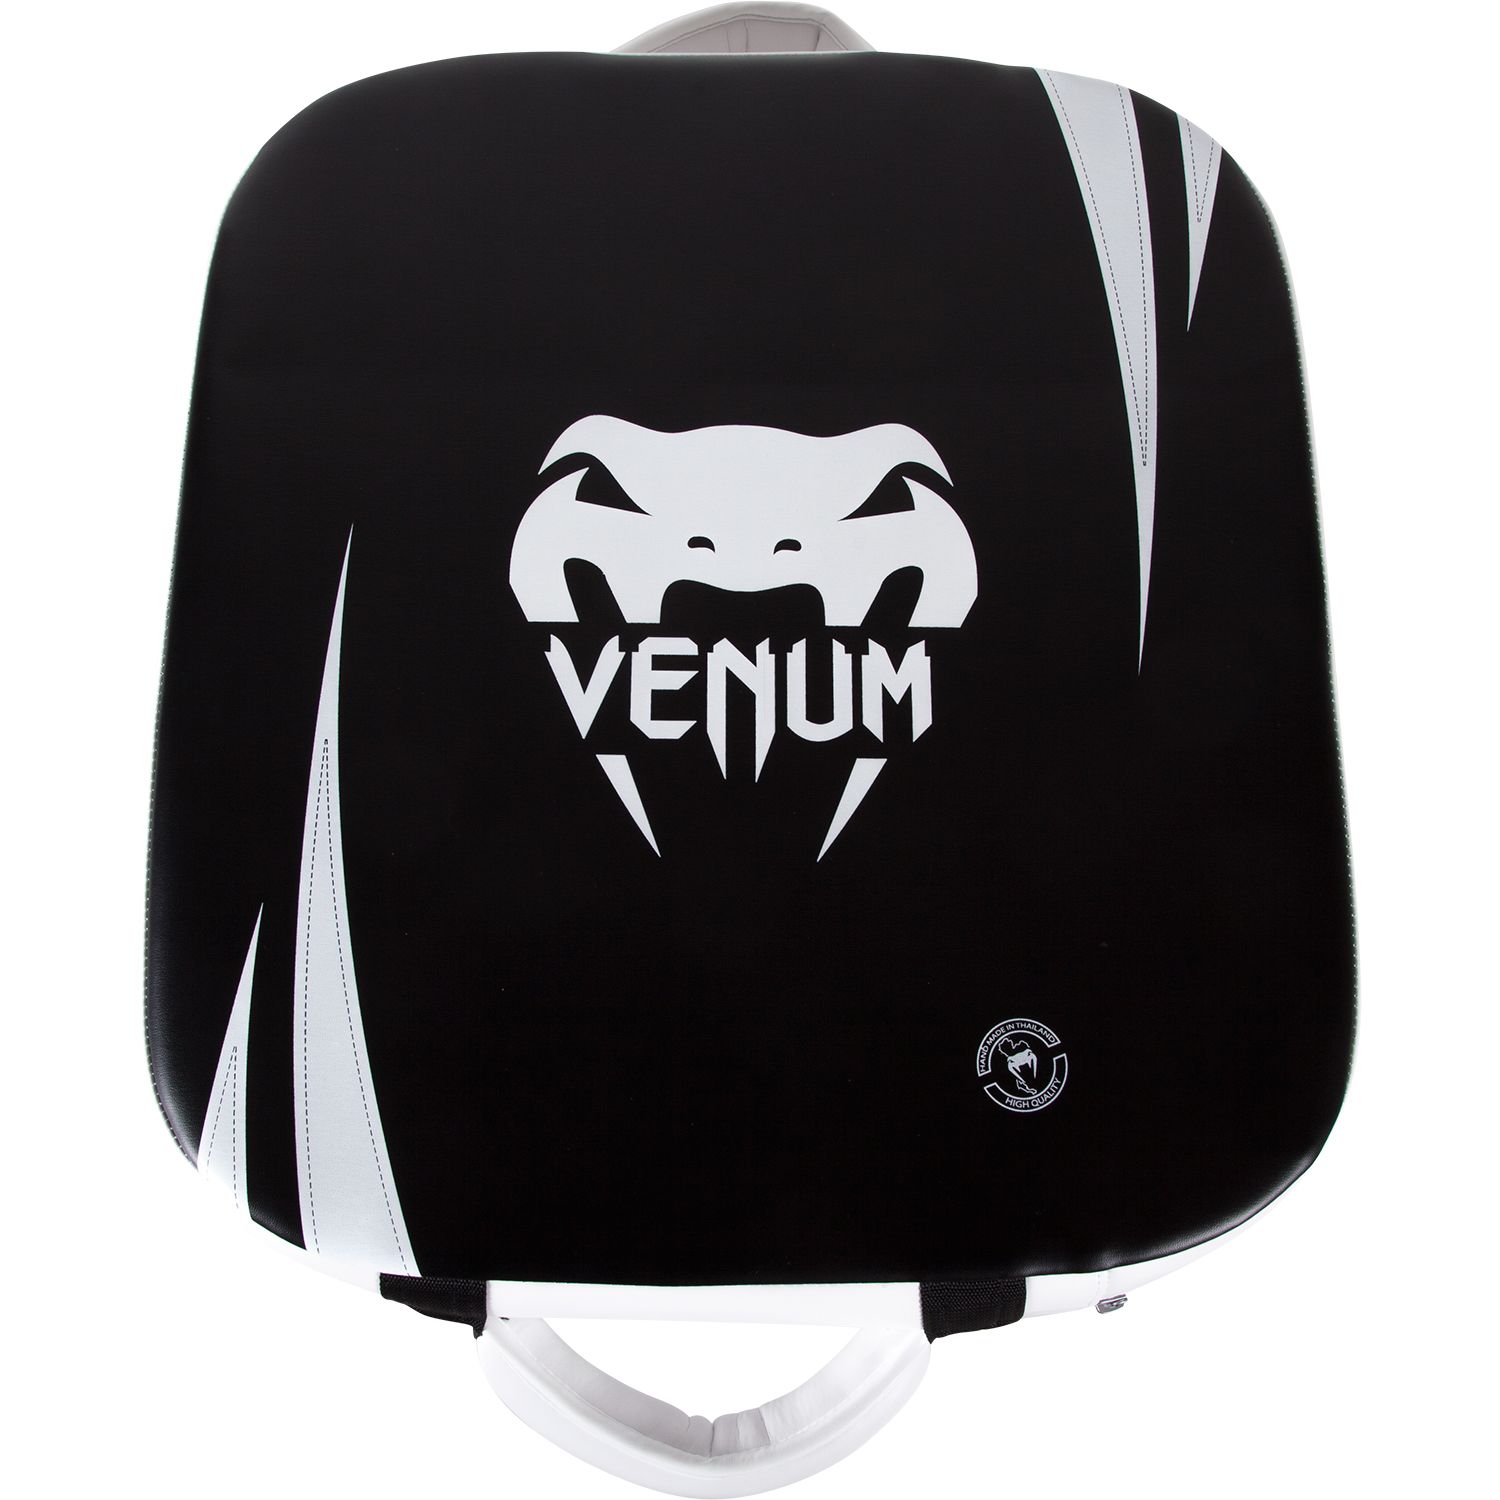 Venum Absolute Square Kick Shield - Click Image to Close